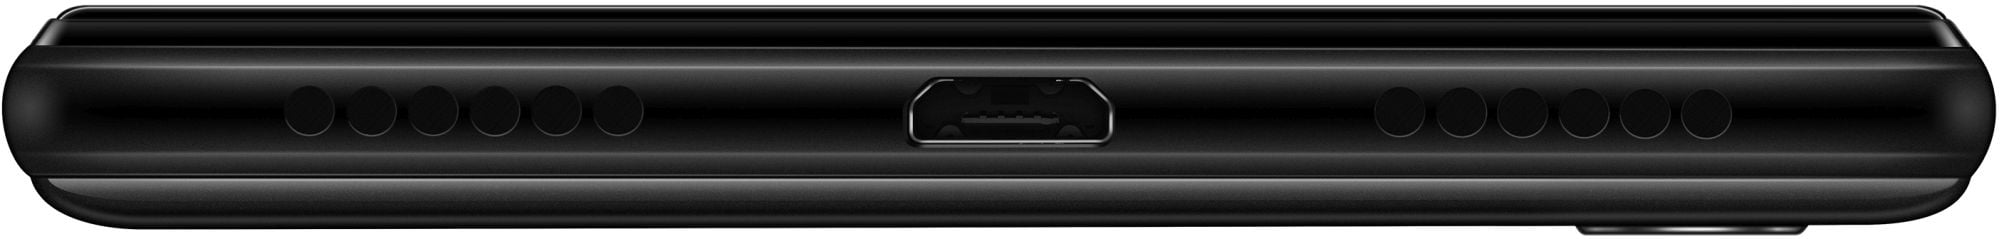 Huawei Honor 8A Prime 64GB Black